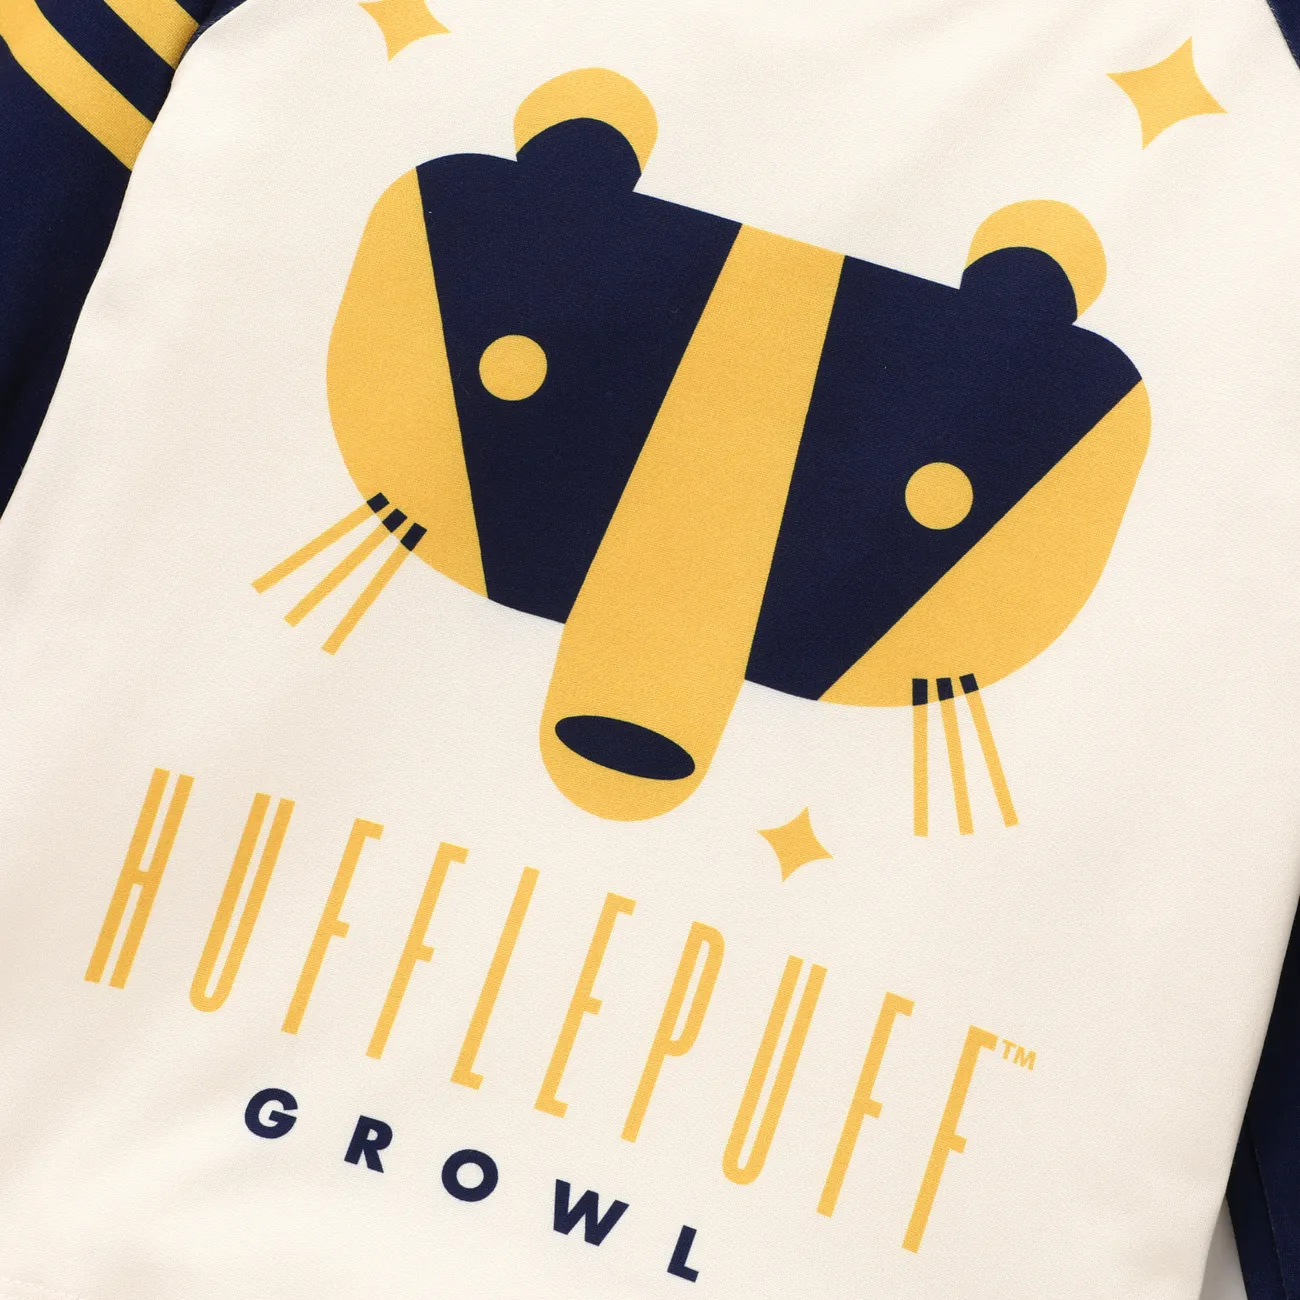 Harry Potter Toddler Girl/Boy Character Print Long-sleeve Pullover Sweatshirt Yellow big image 1